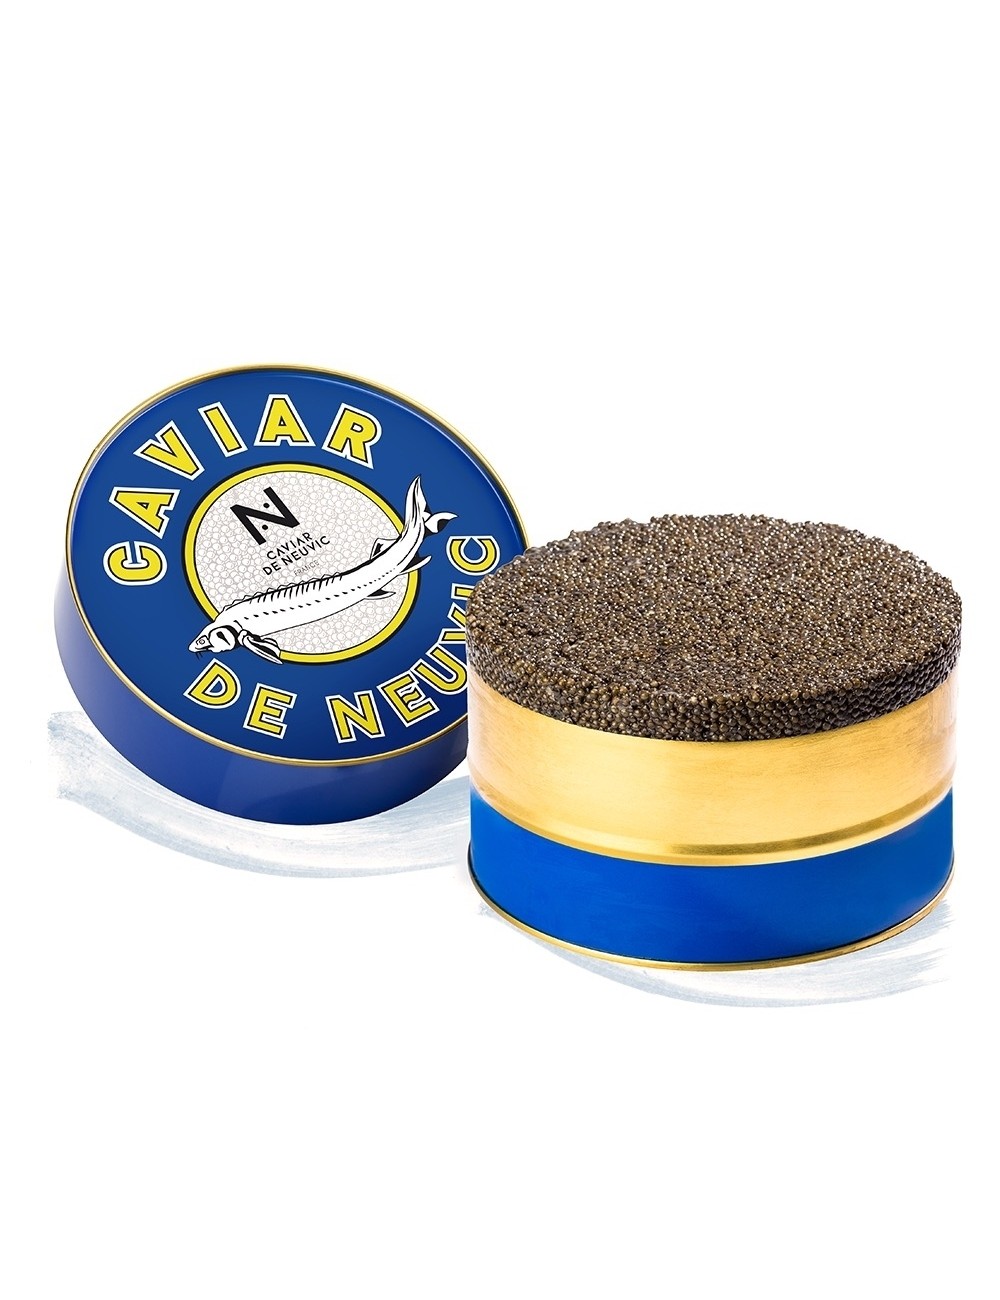 Prix du caviar : un caviar blanc à 30 000e le kilo